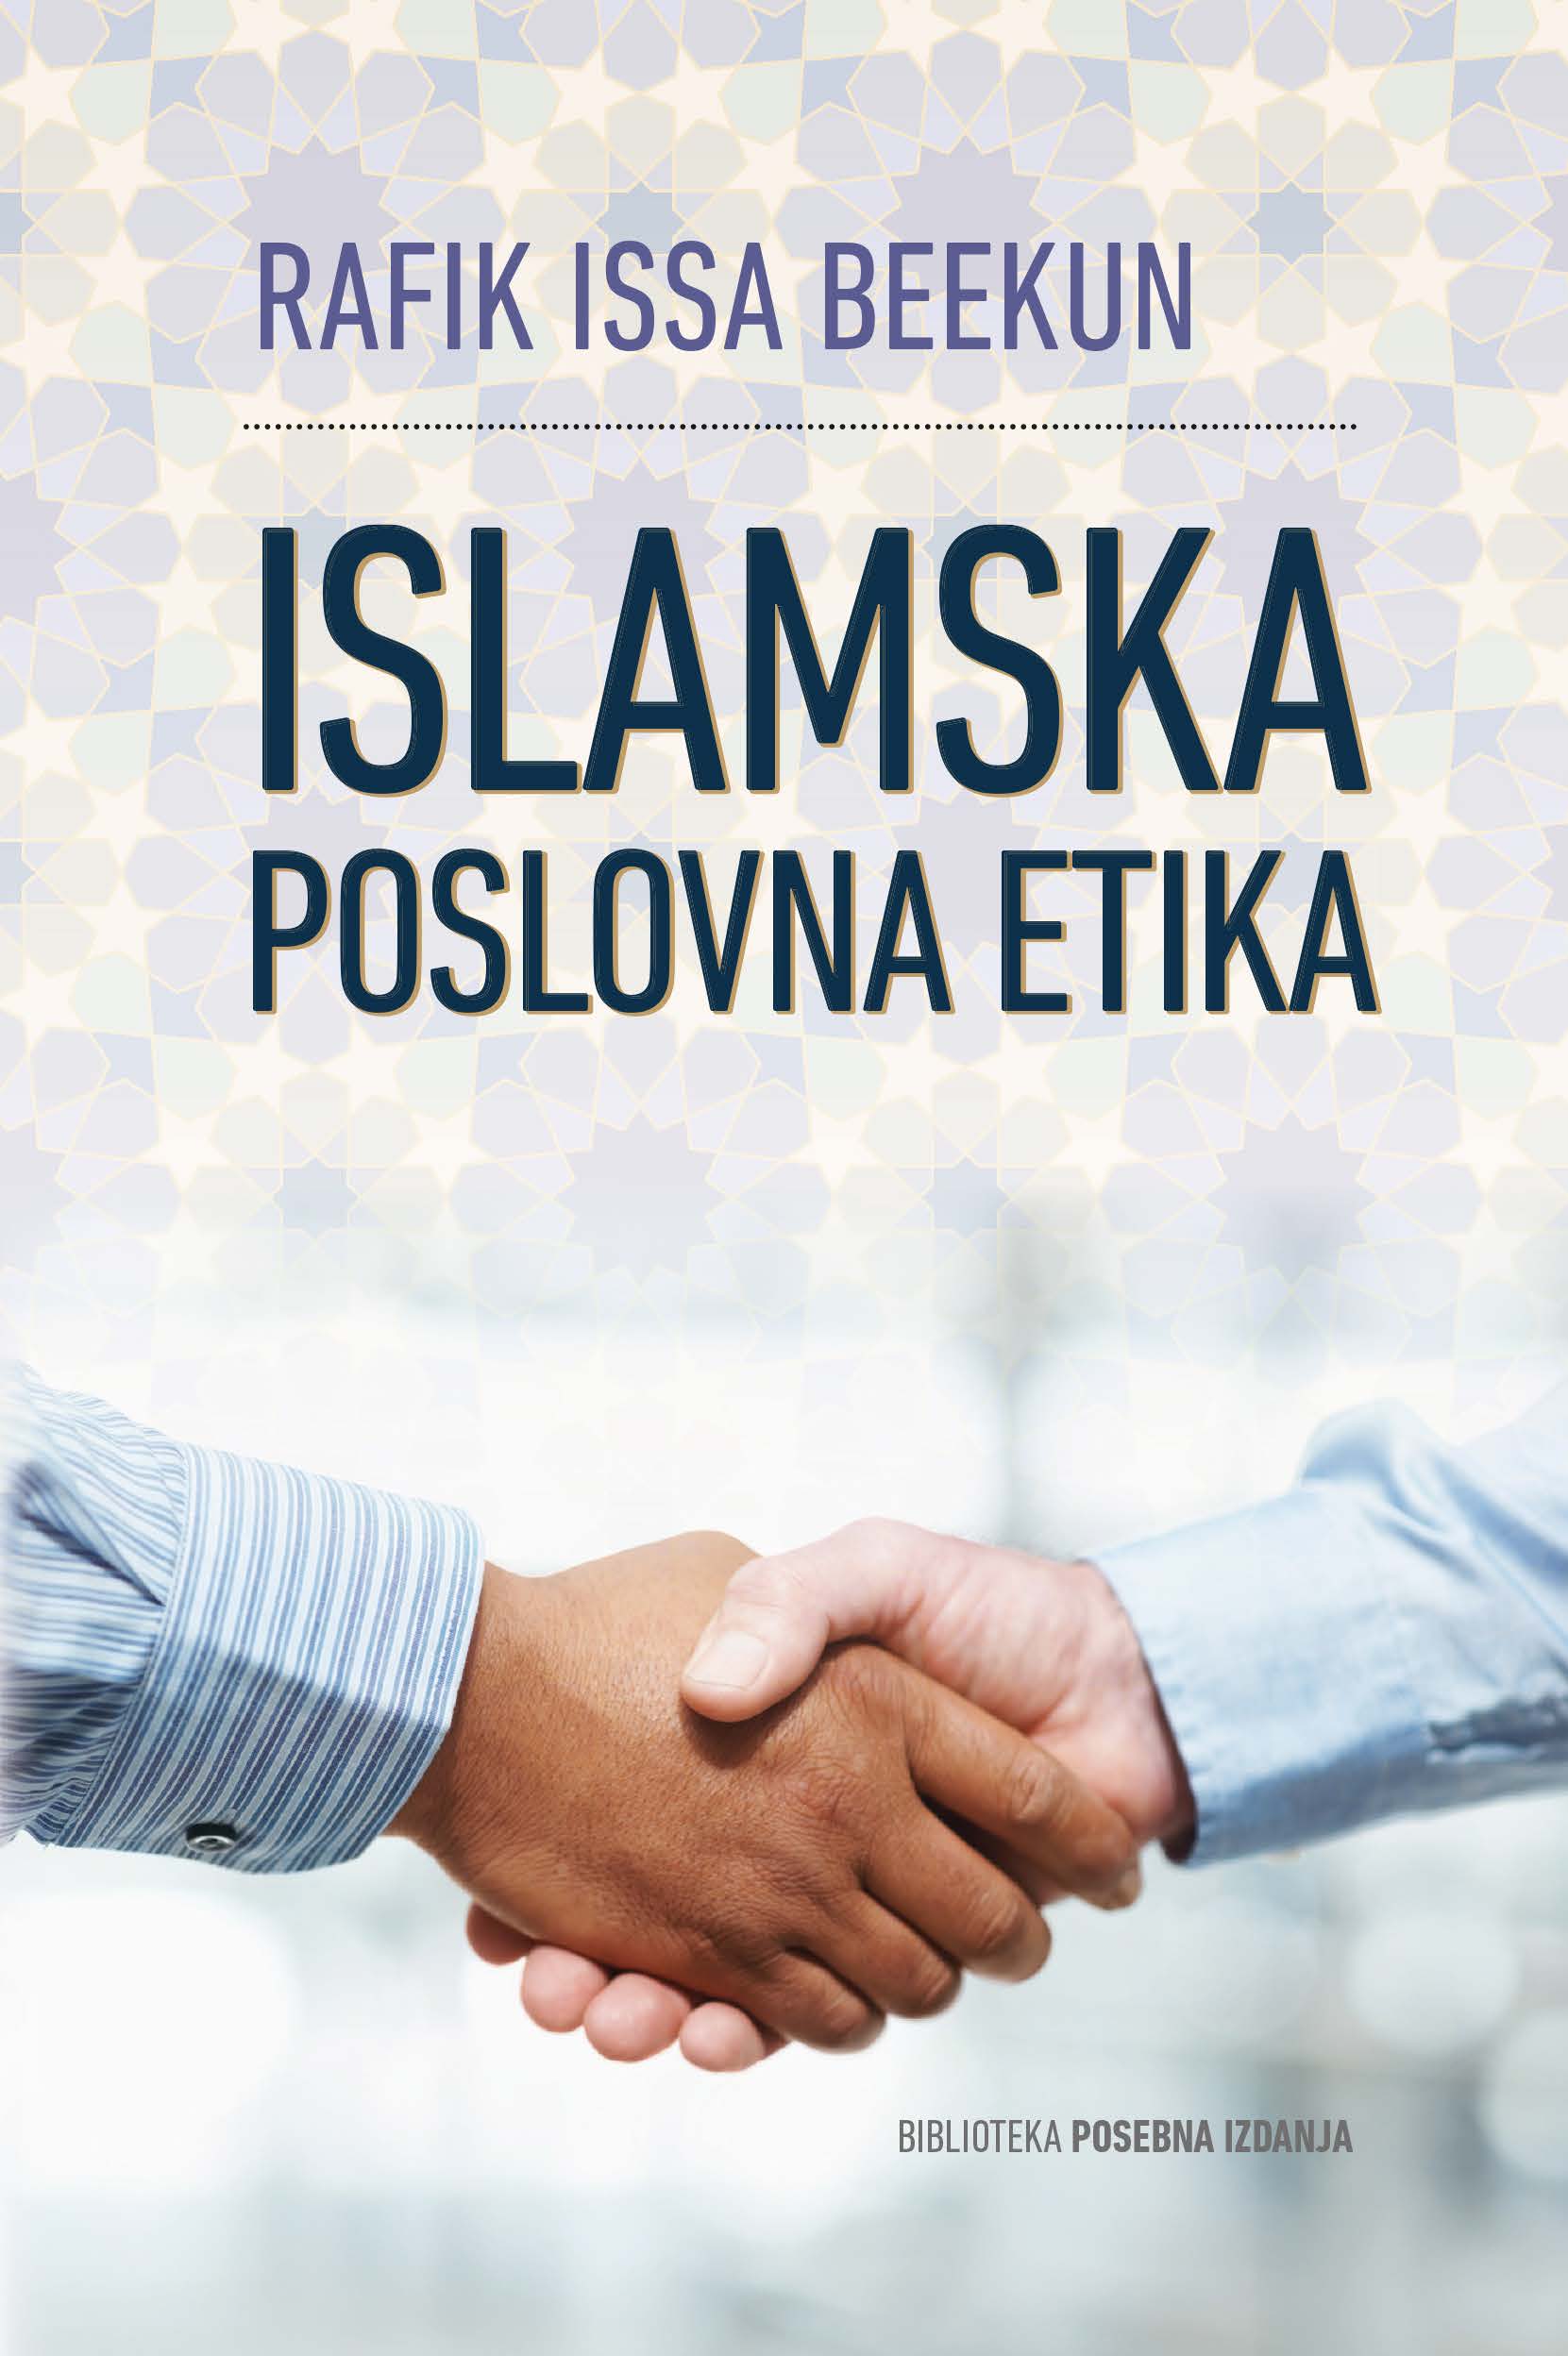 Bosnian: ISLAMSKA POSLOVNA ETIKA (Islamic Business Ethics)